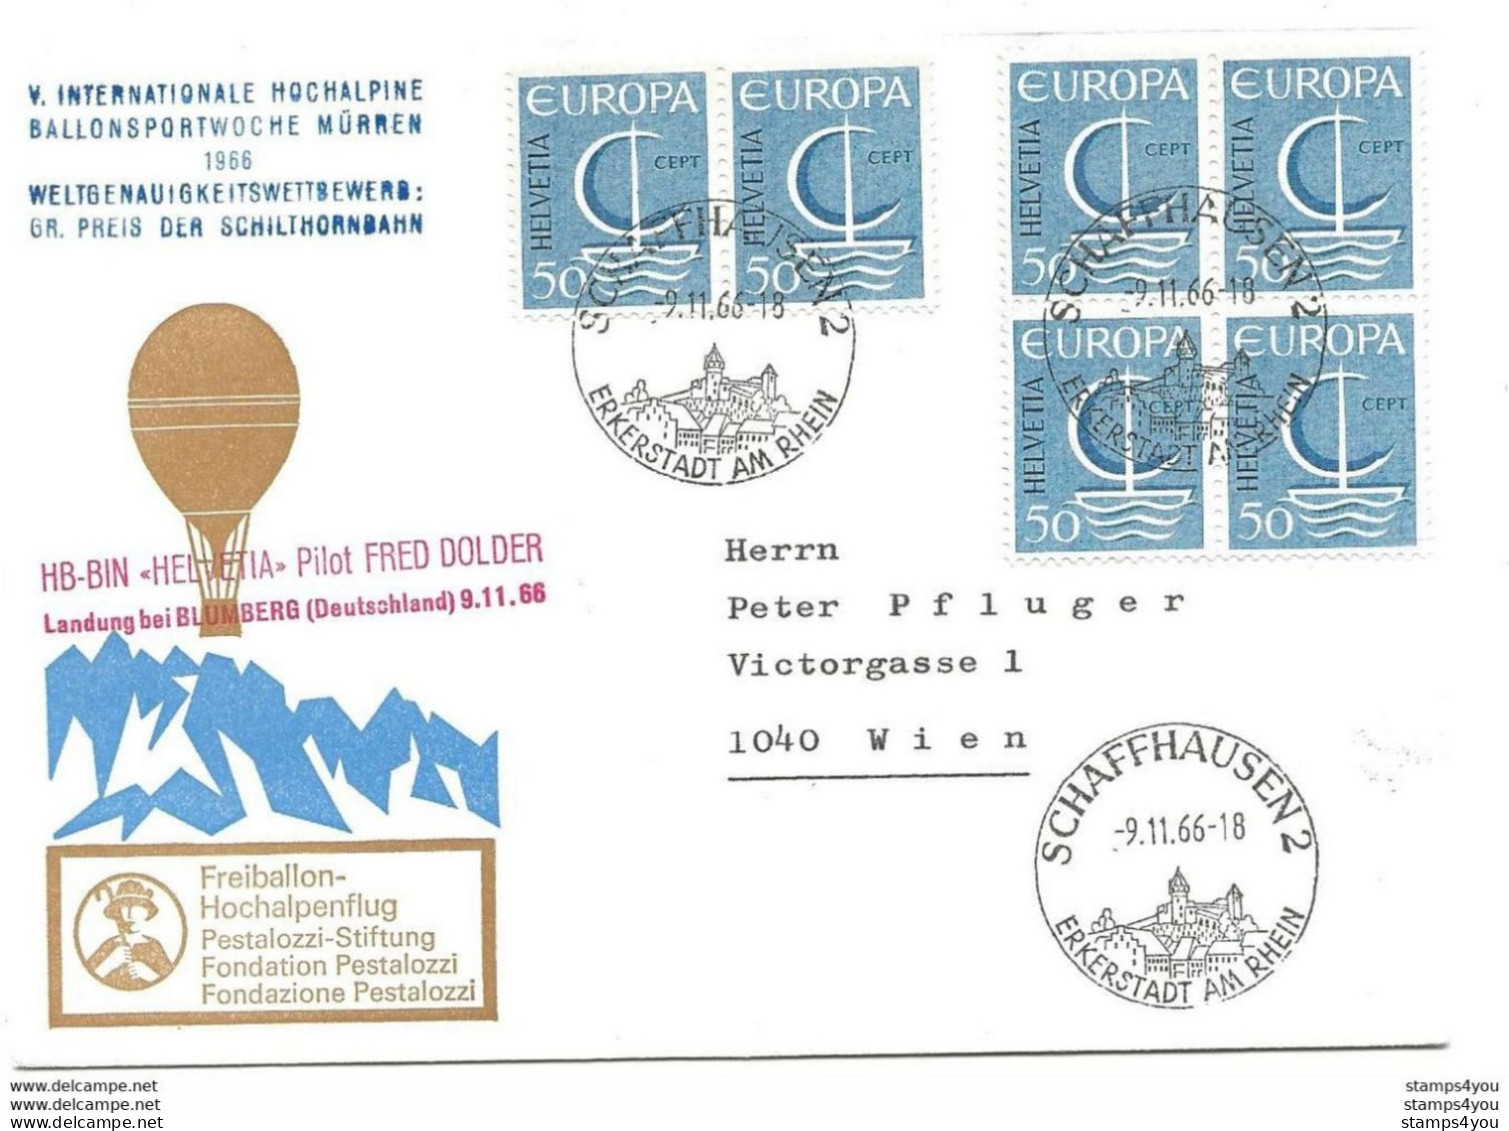 245 - 14 - Enveloppe Suisse Vol Ballon "Hochalpine Ballonsportwoche Mürren 1966" Affranchissement Timbres Europa - Ideas Europeas